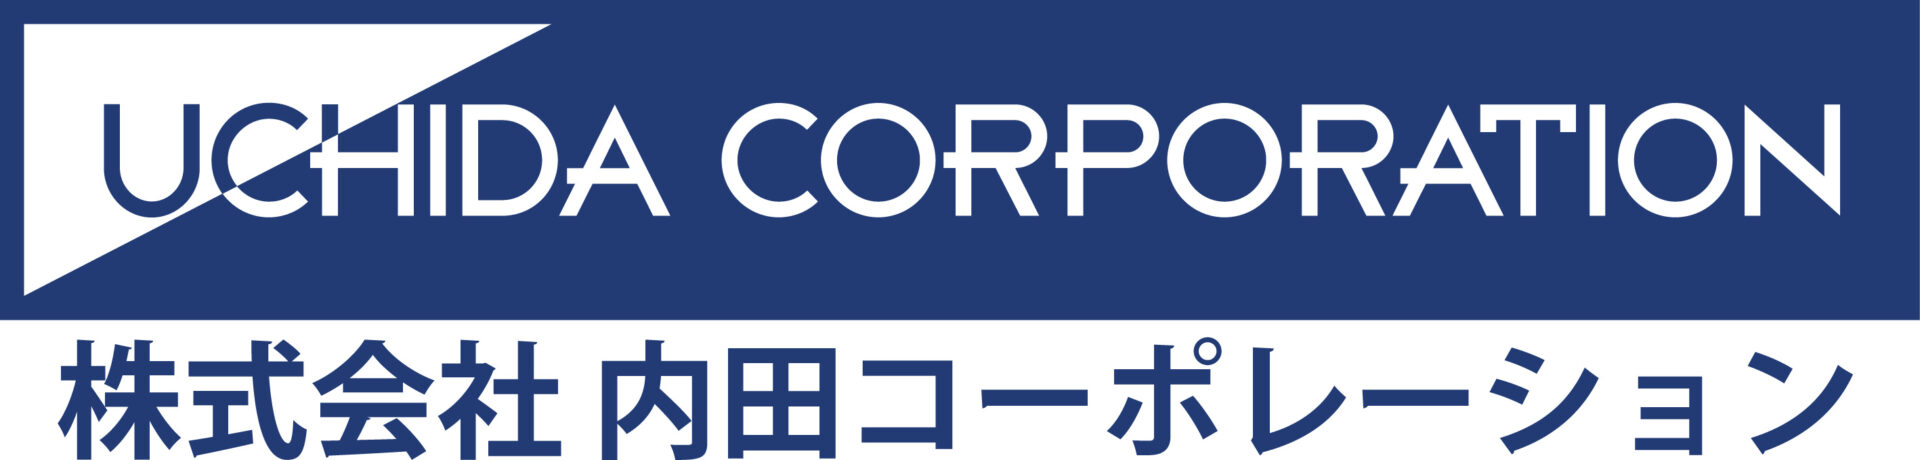 Uchida Corporation